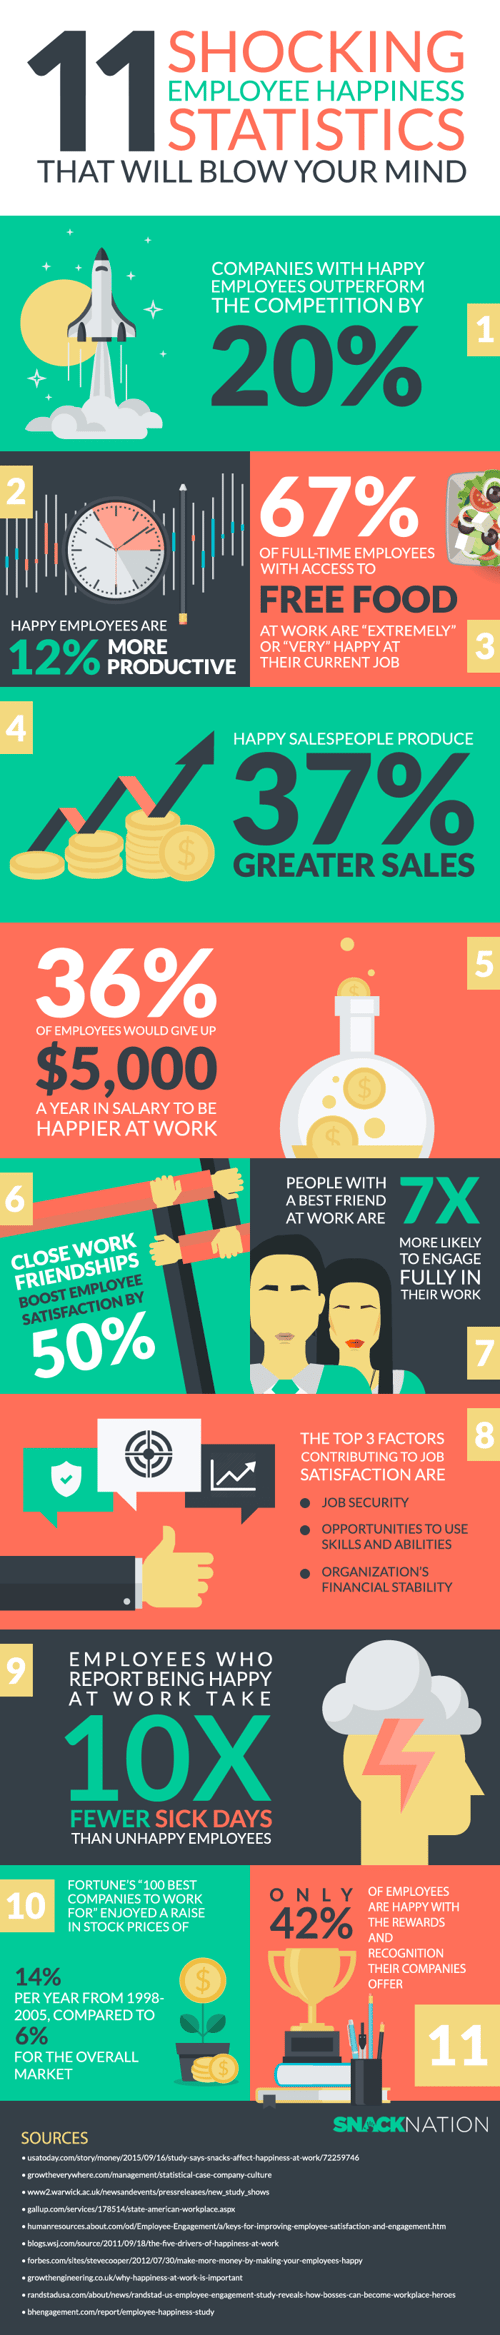 Employee-happiness-infographic